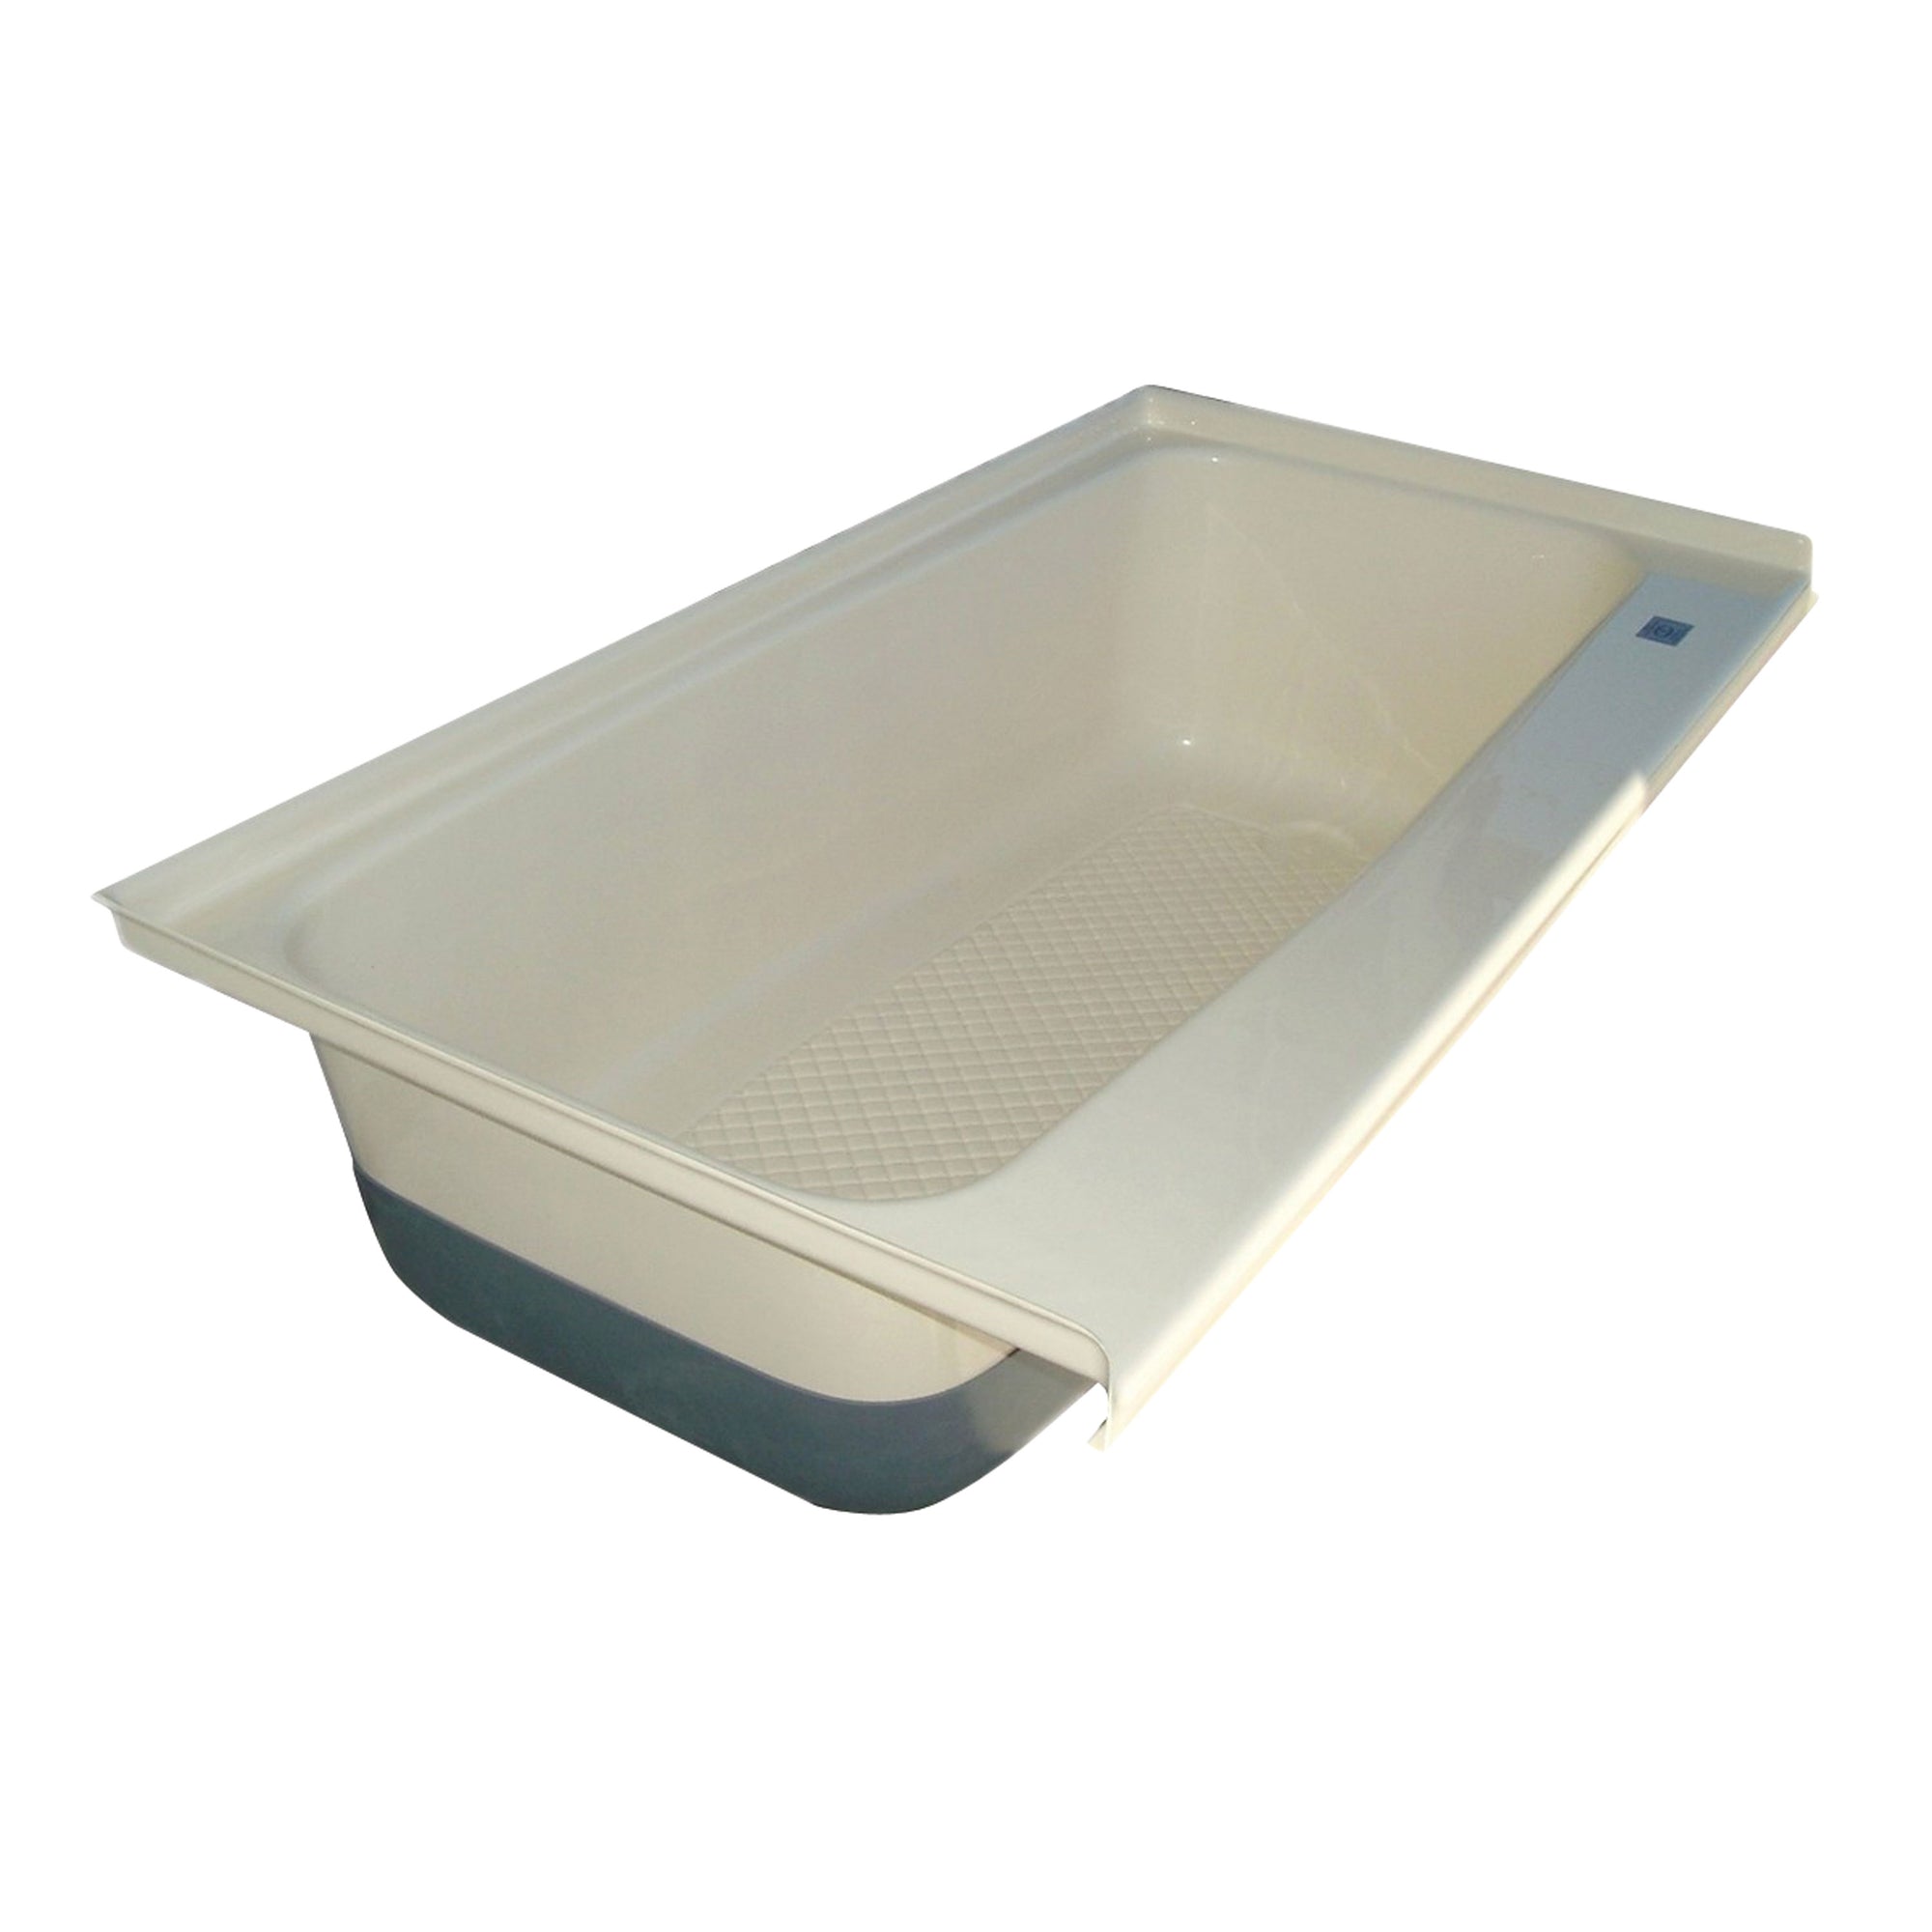 Icon 00480 Bath Tub with Right Hand Drain TU600RH - Polar White